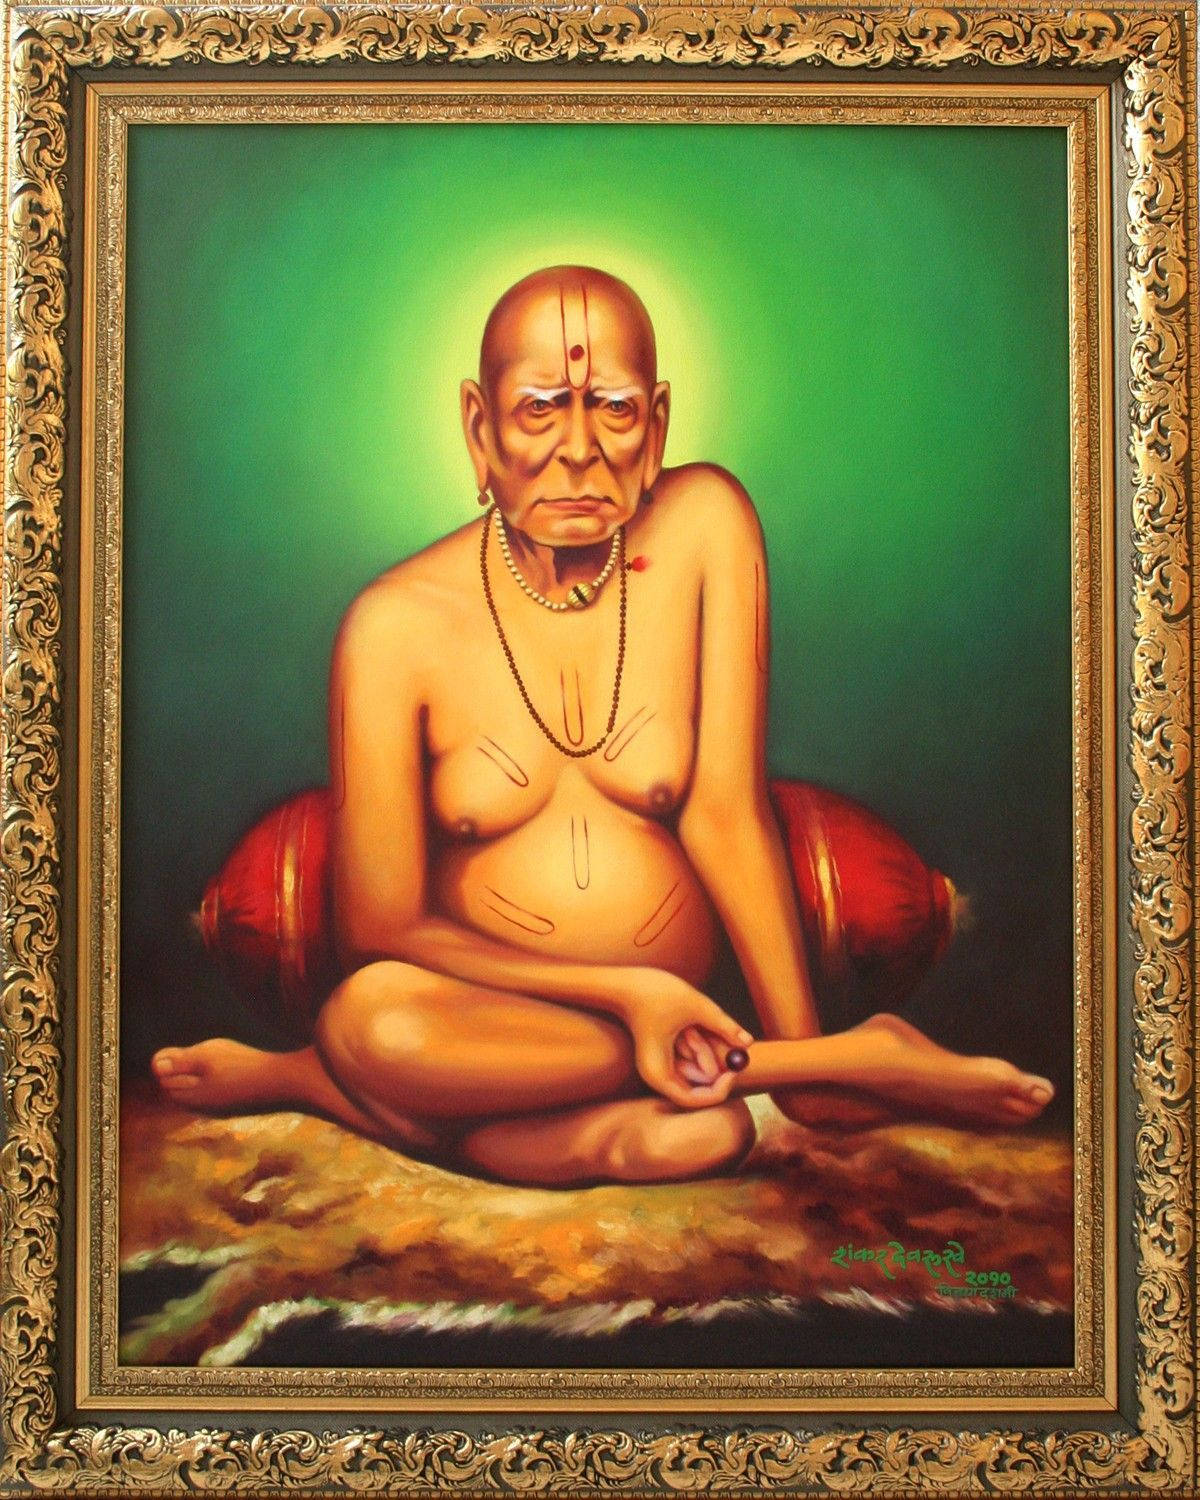 Shri Swami Samarth Framed With Green Background Background